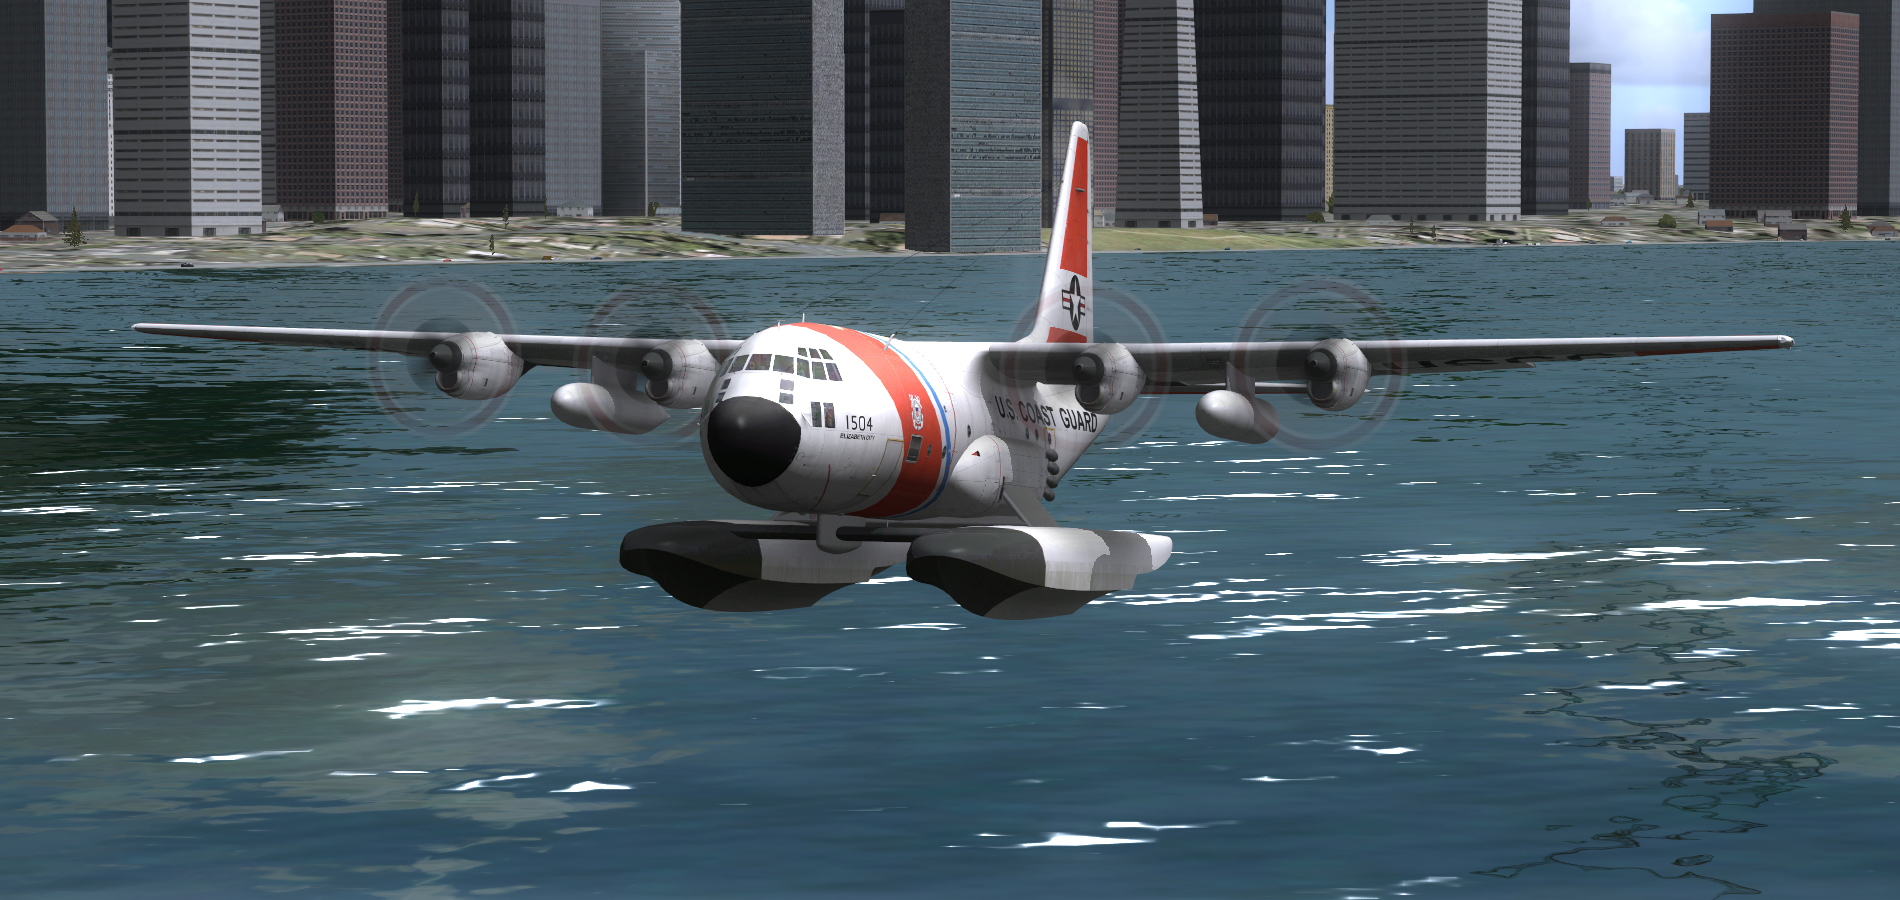 c_130_floatplane_nyc_3_by_agnott-d4nkp23